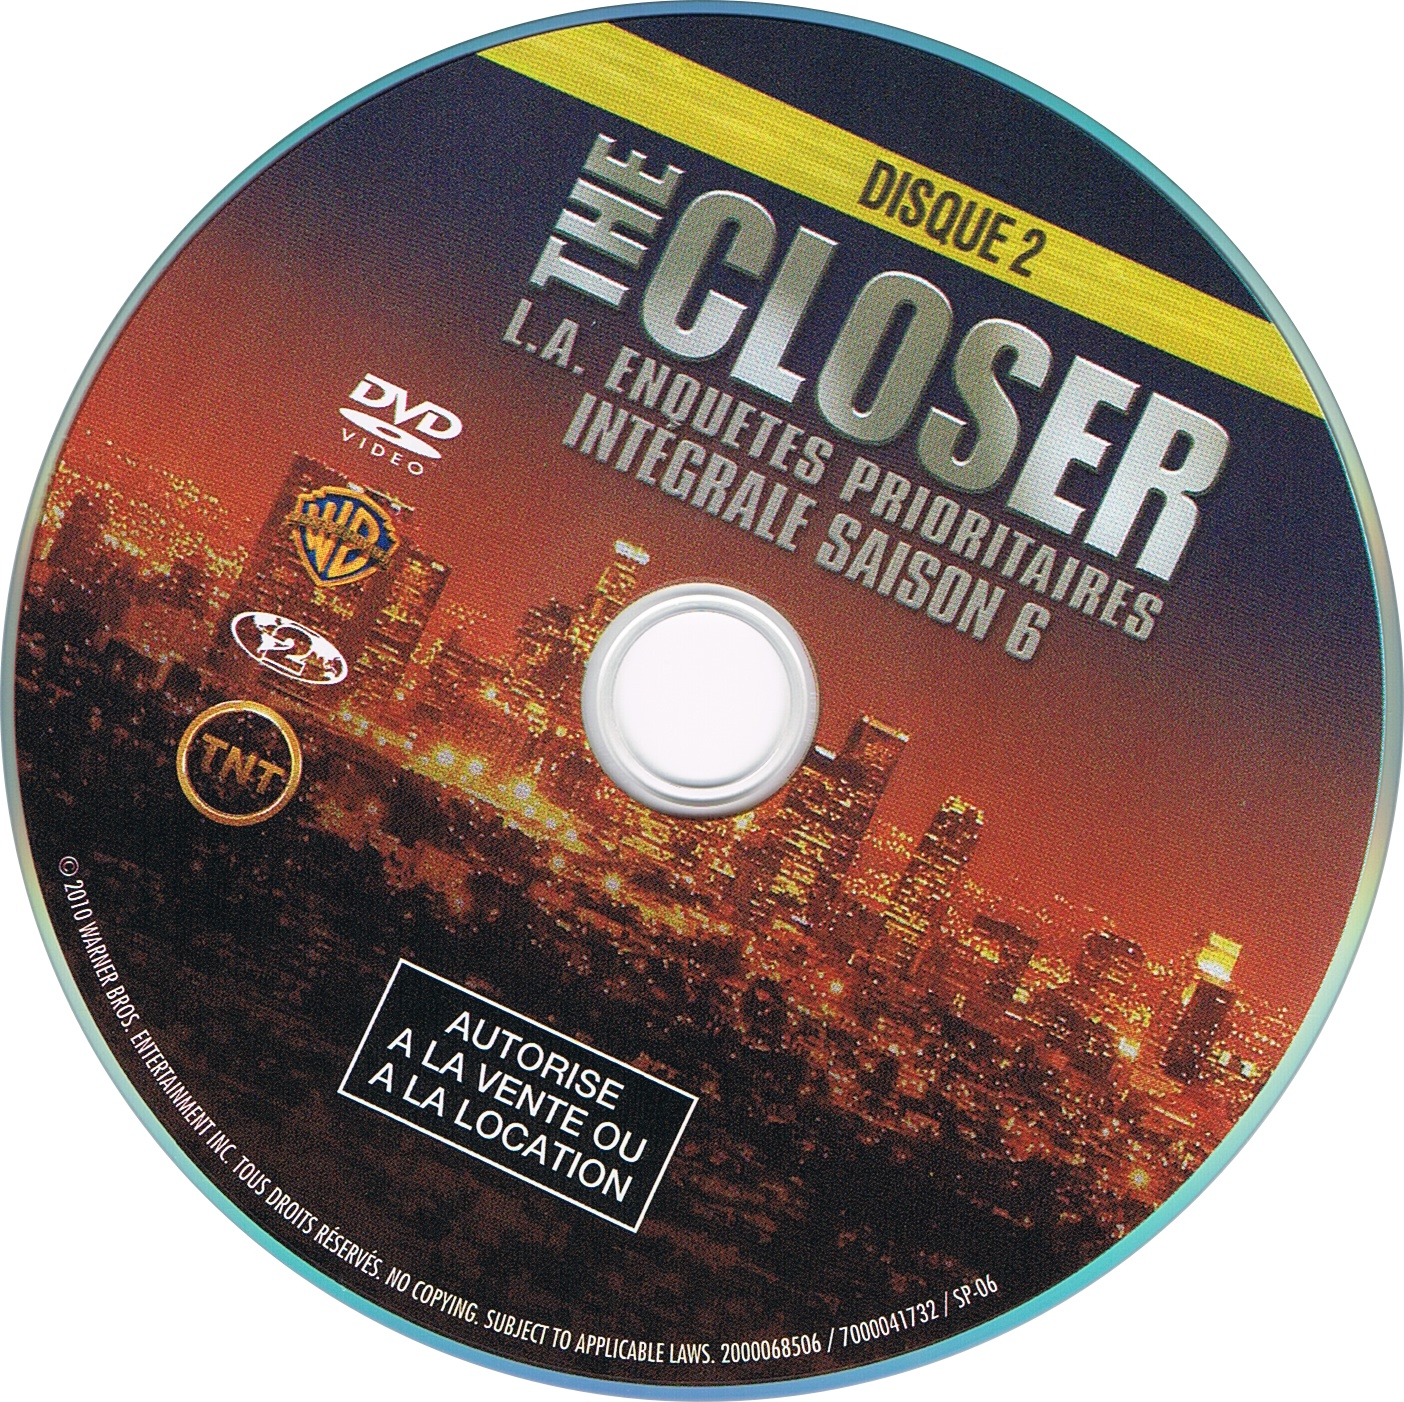 The Closer Saison 6 DISC 2